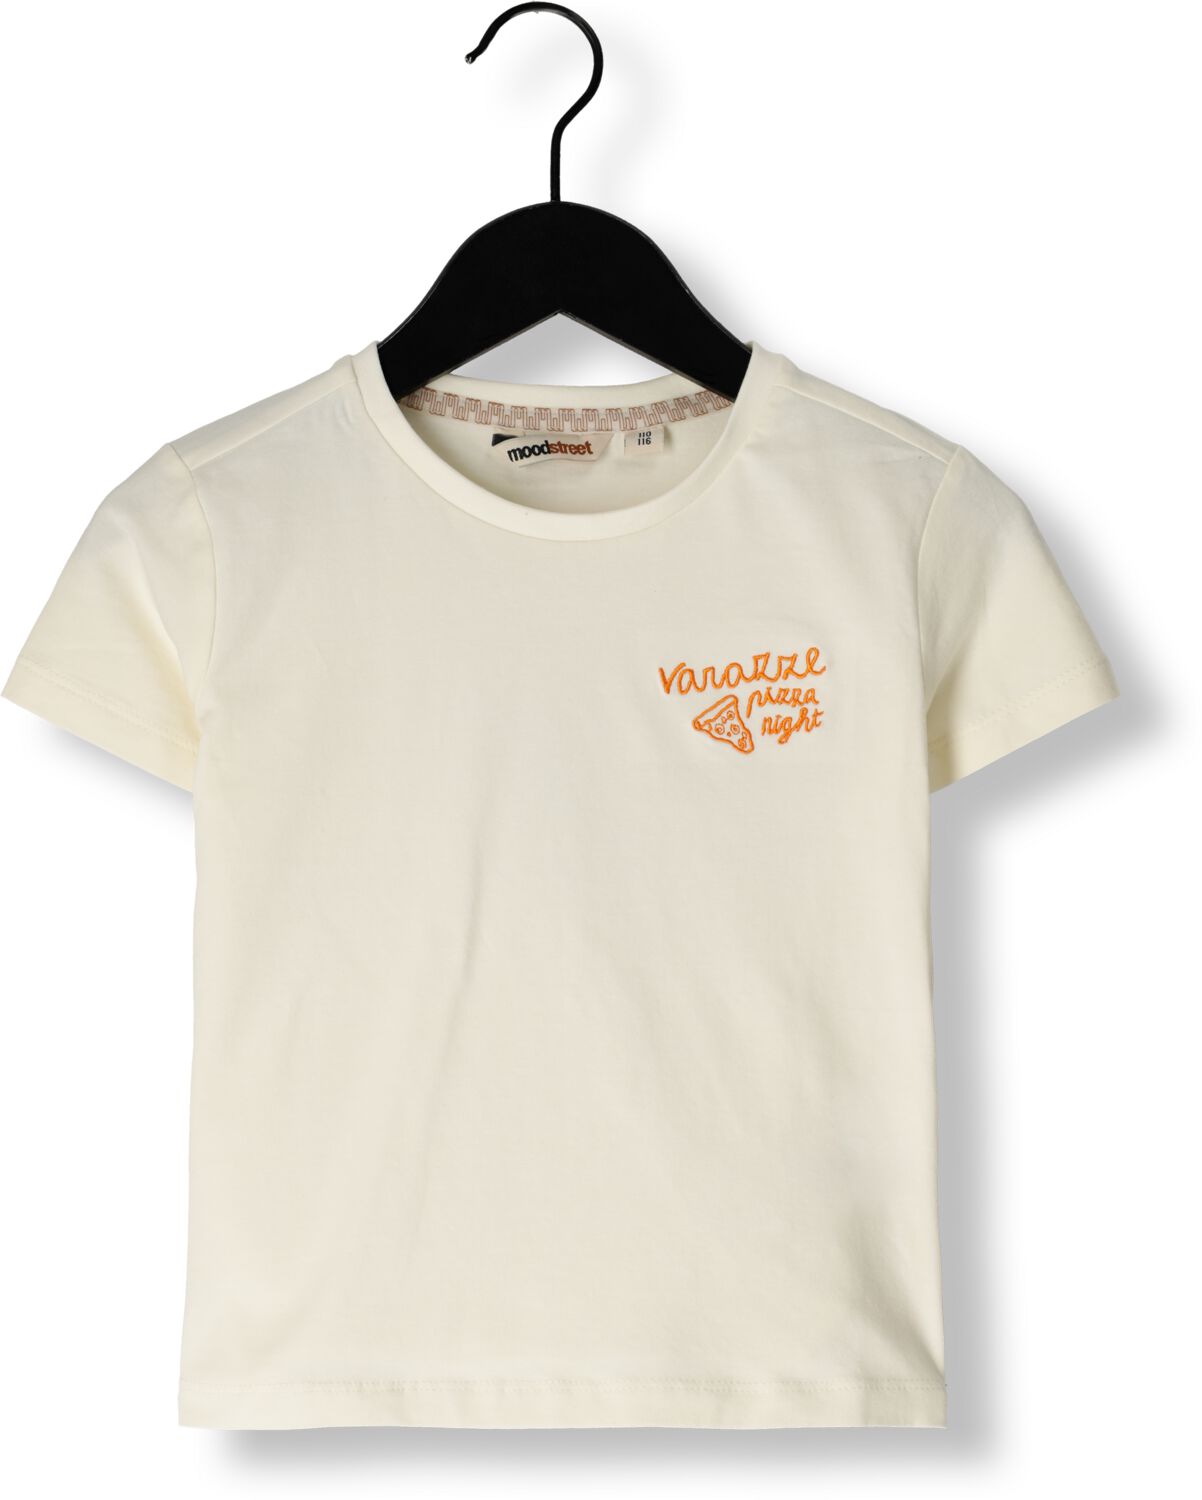 MOODSTREET Meisjes Tops & T-shirts Girls T-shirt Front + Back Print Ecru